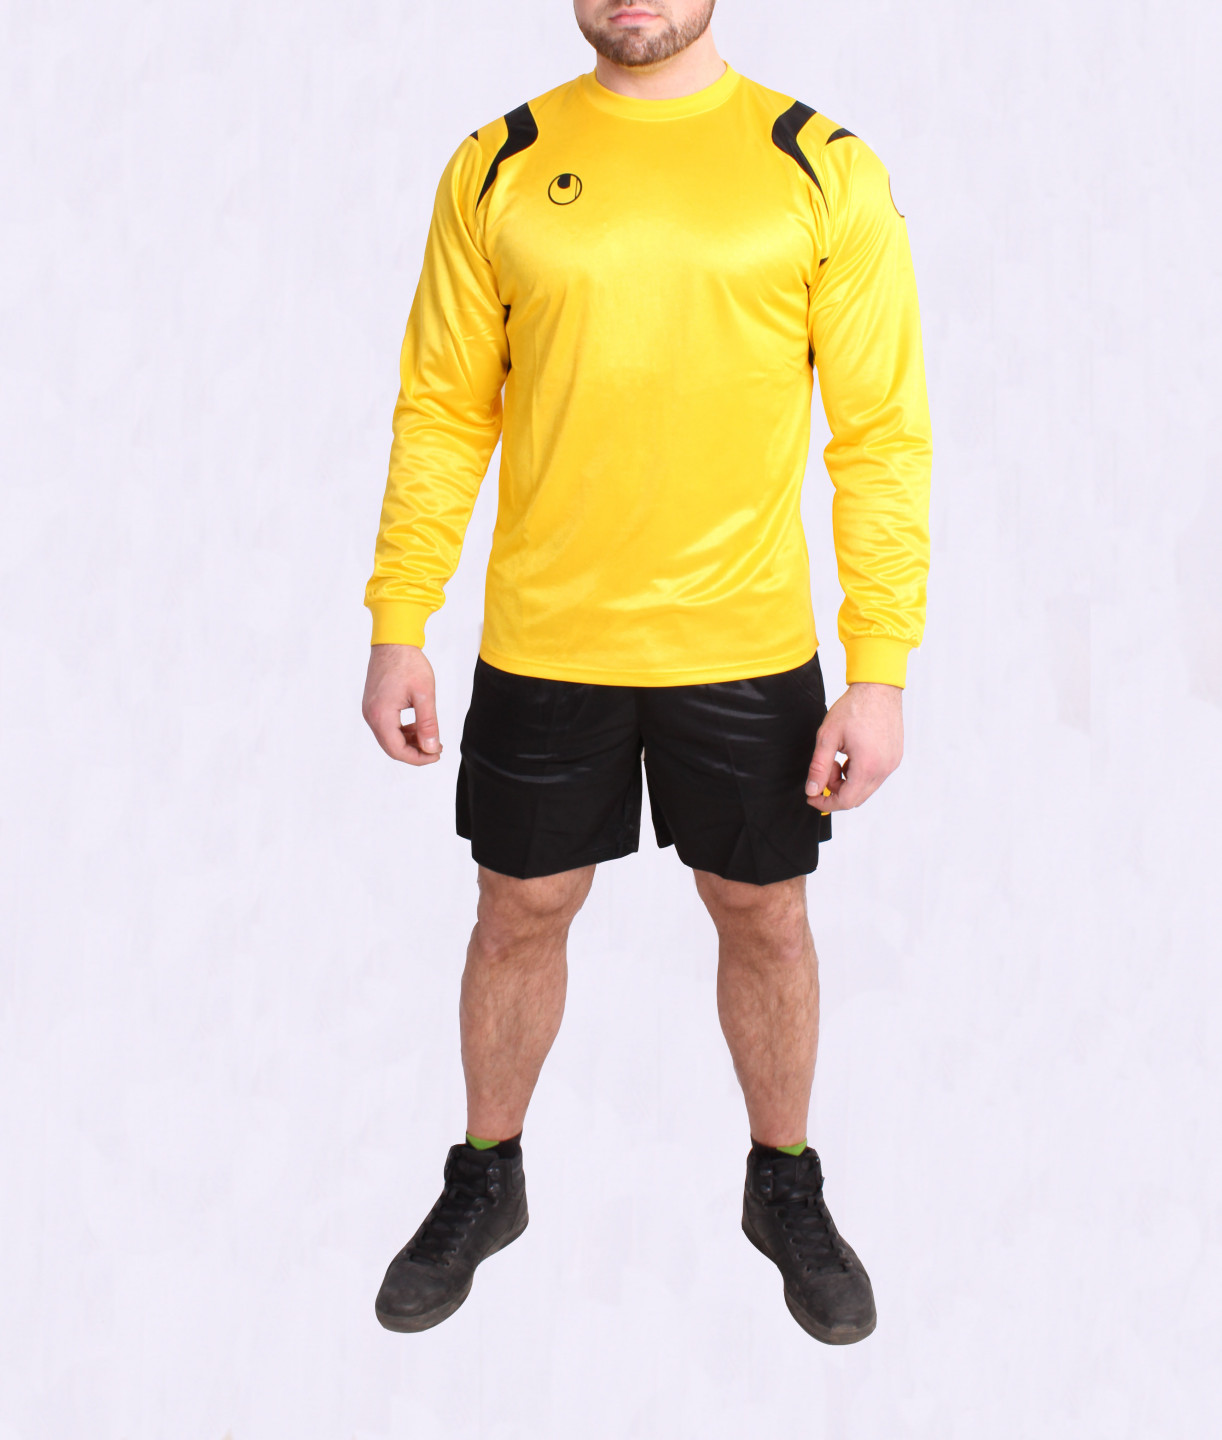 Uhlsport UHLSPORT žlutý dres s černými kraťasy vel. M